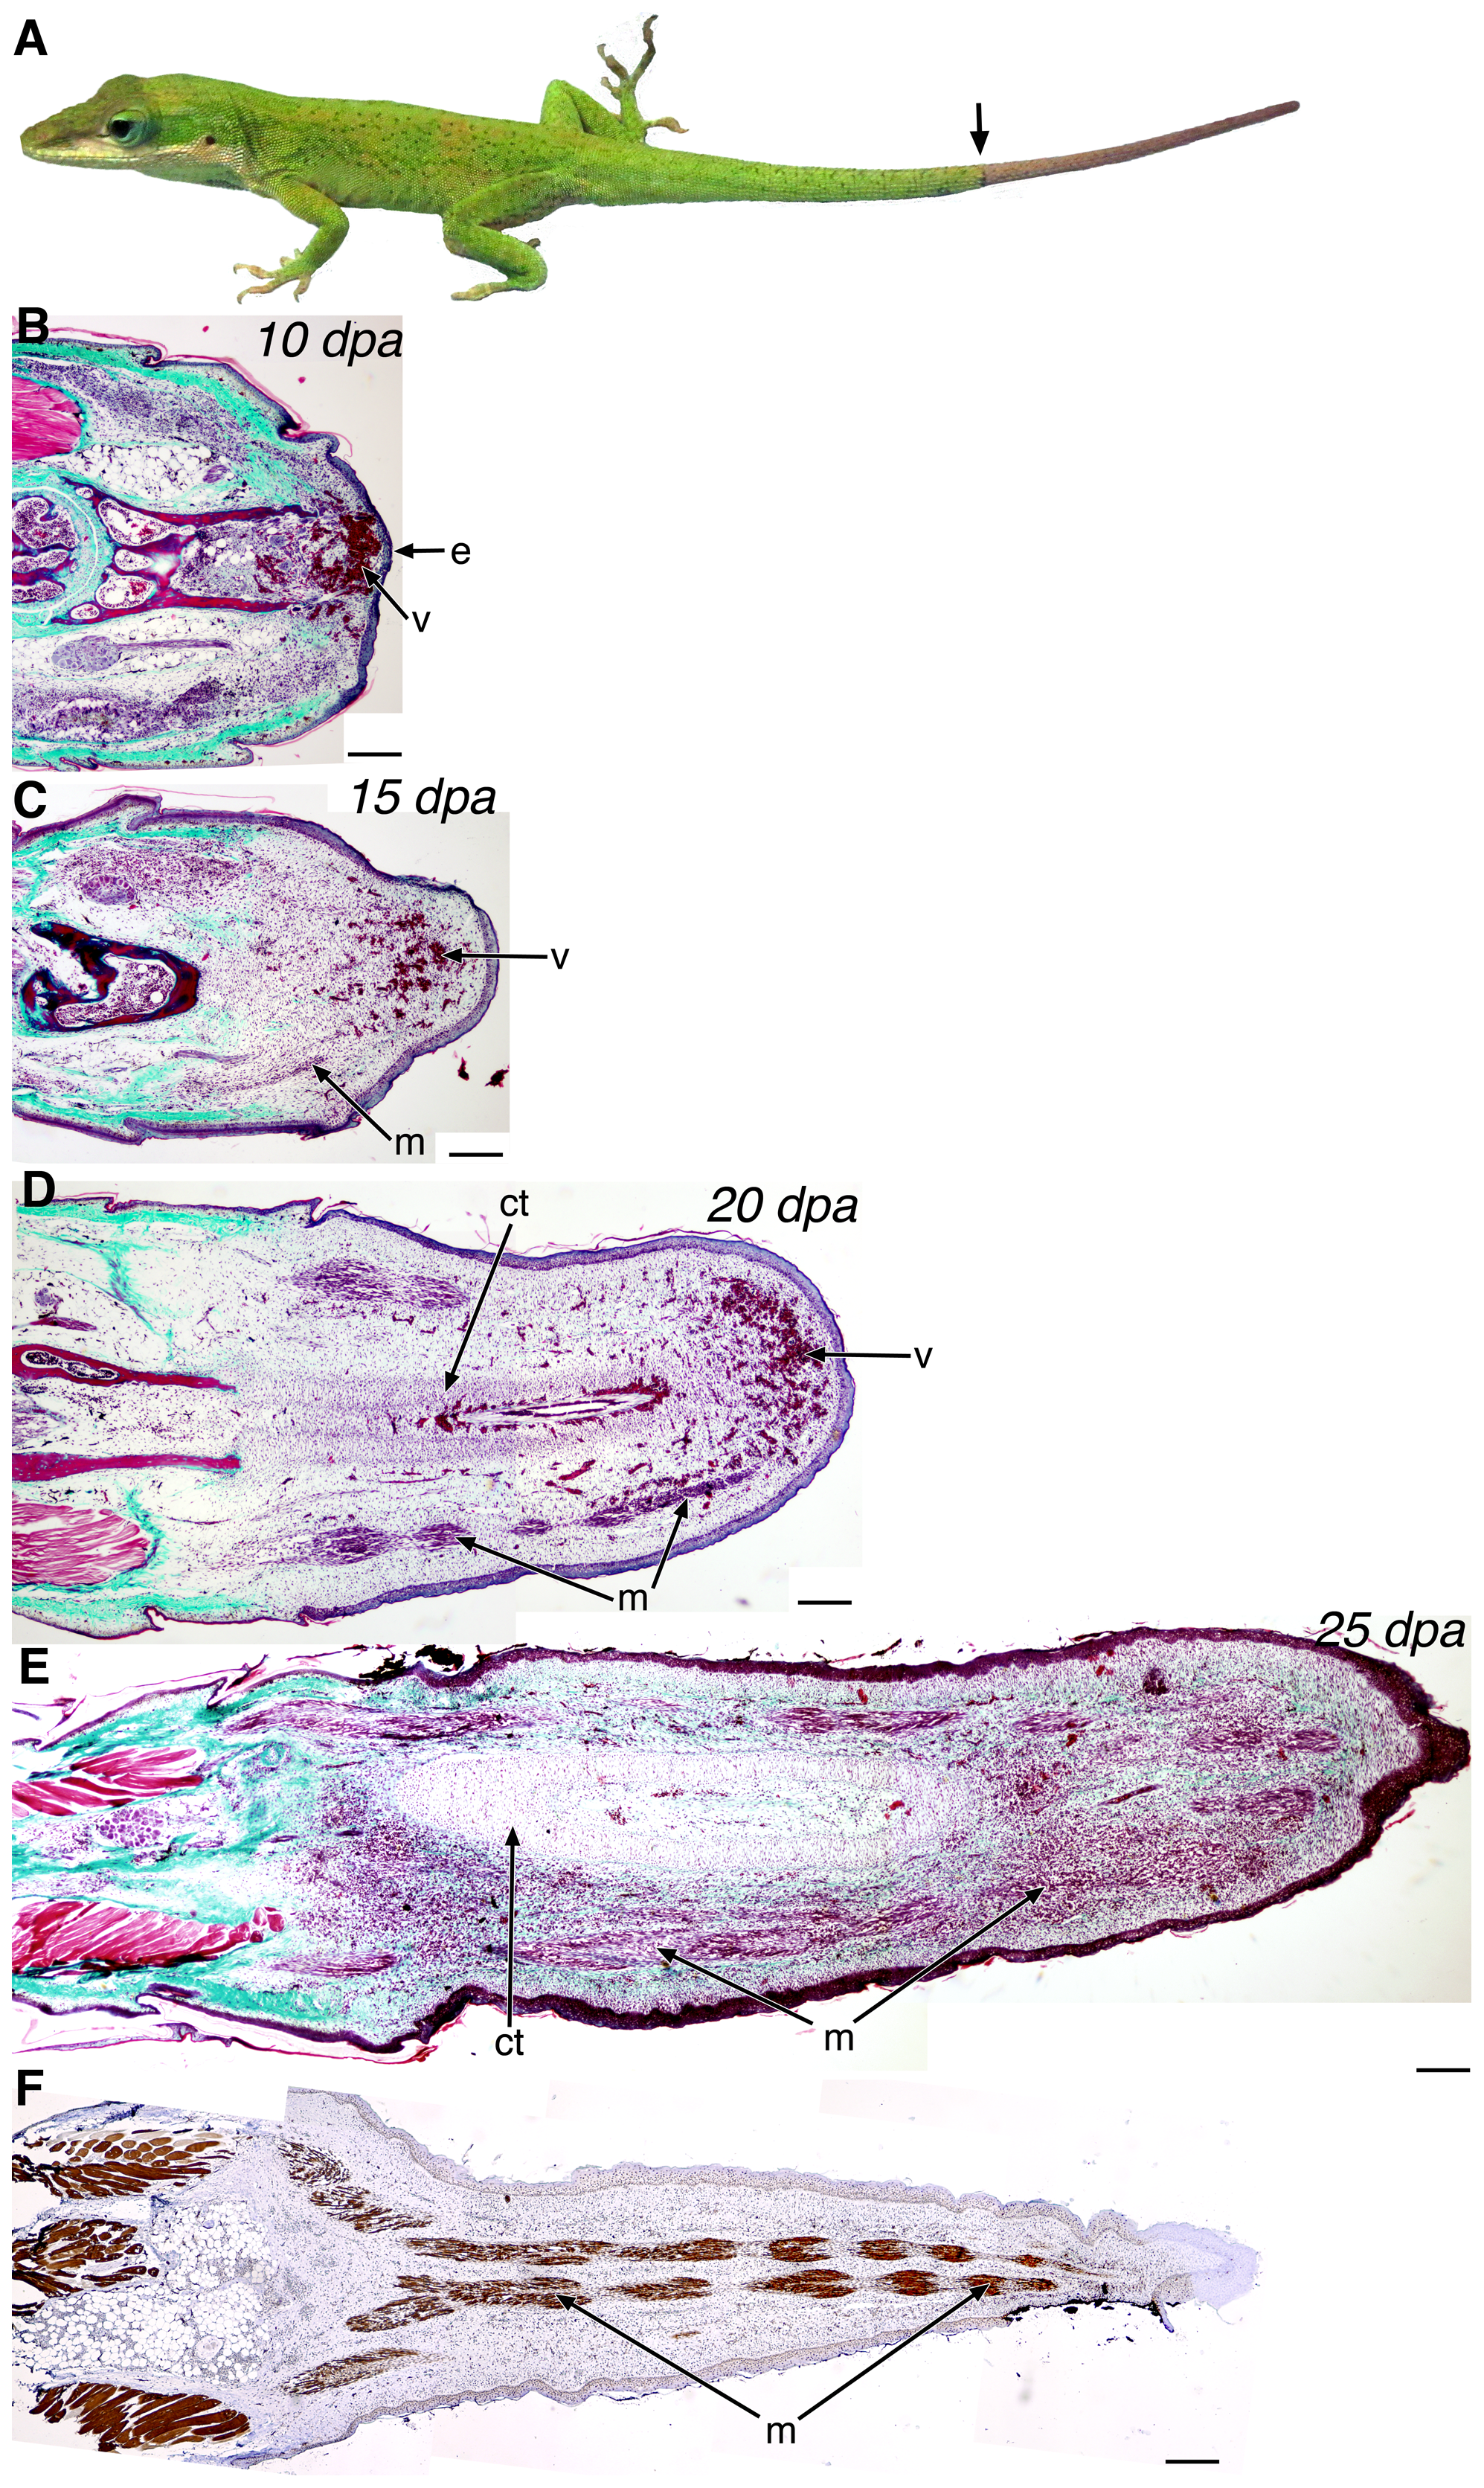 How Lizard Tails Could Help Scientists Study Human Limb Regeneration